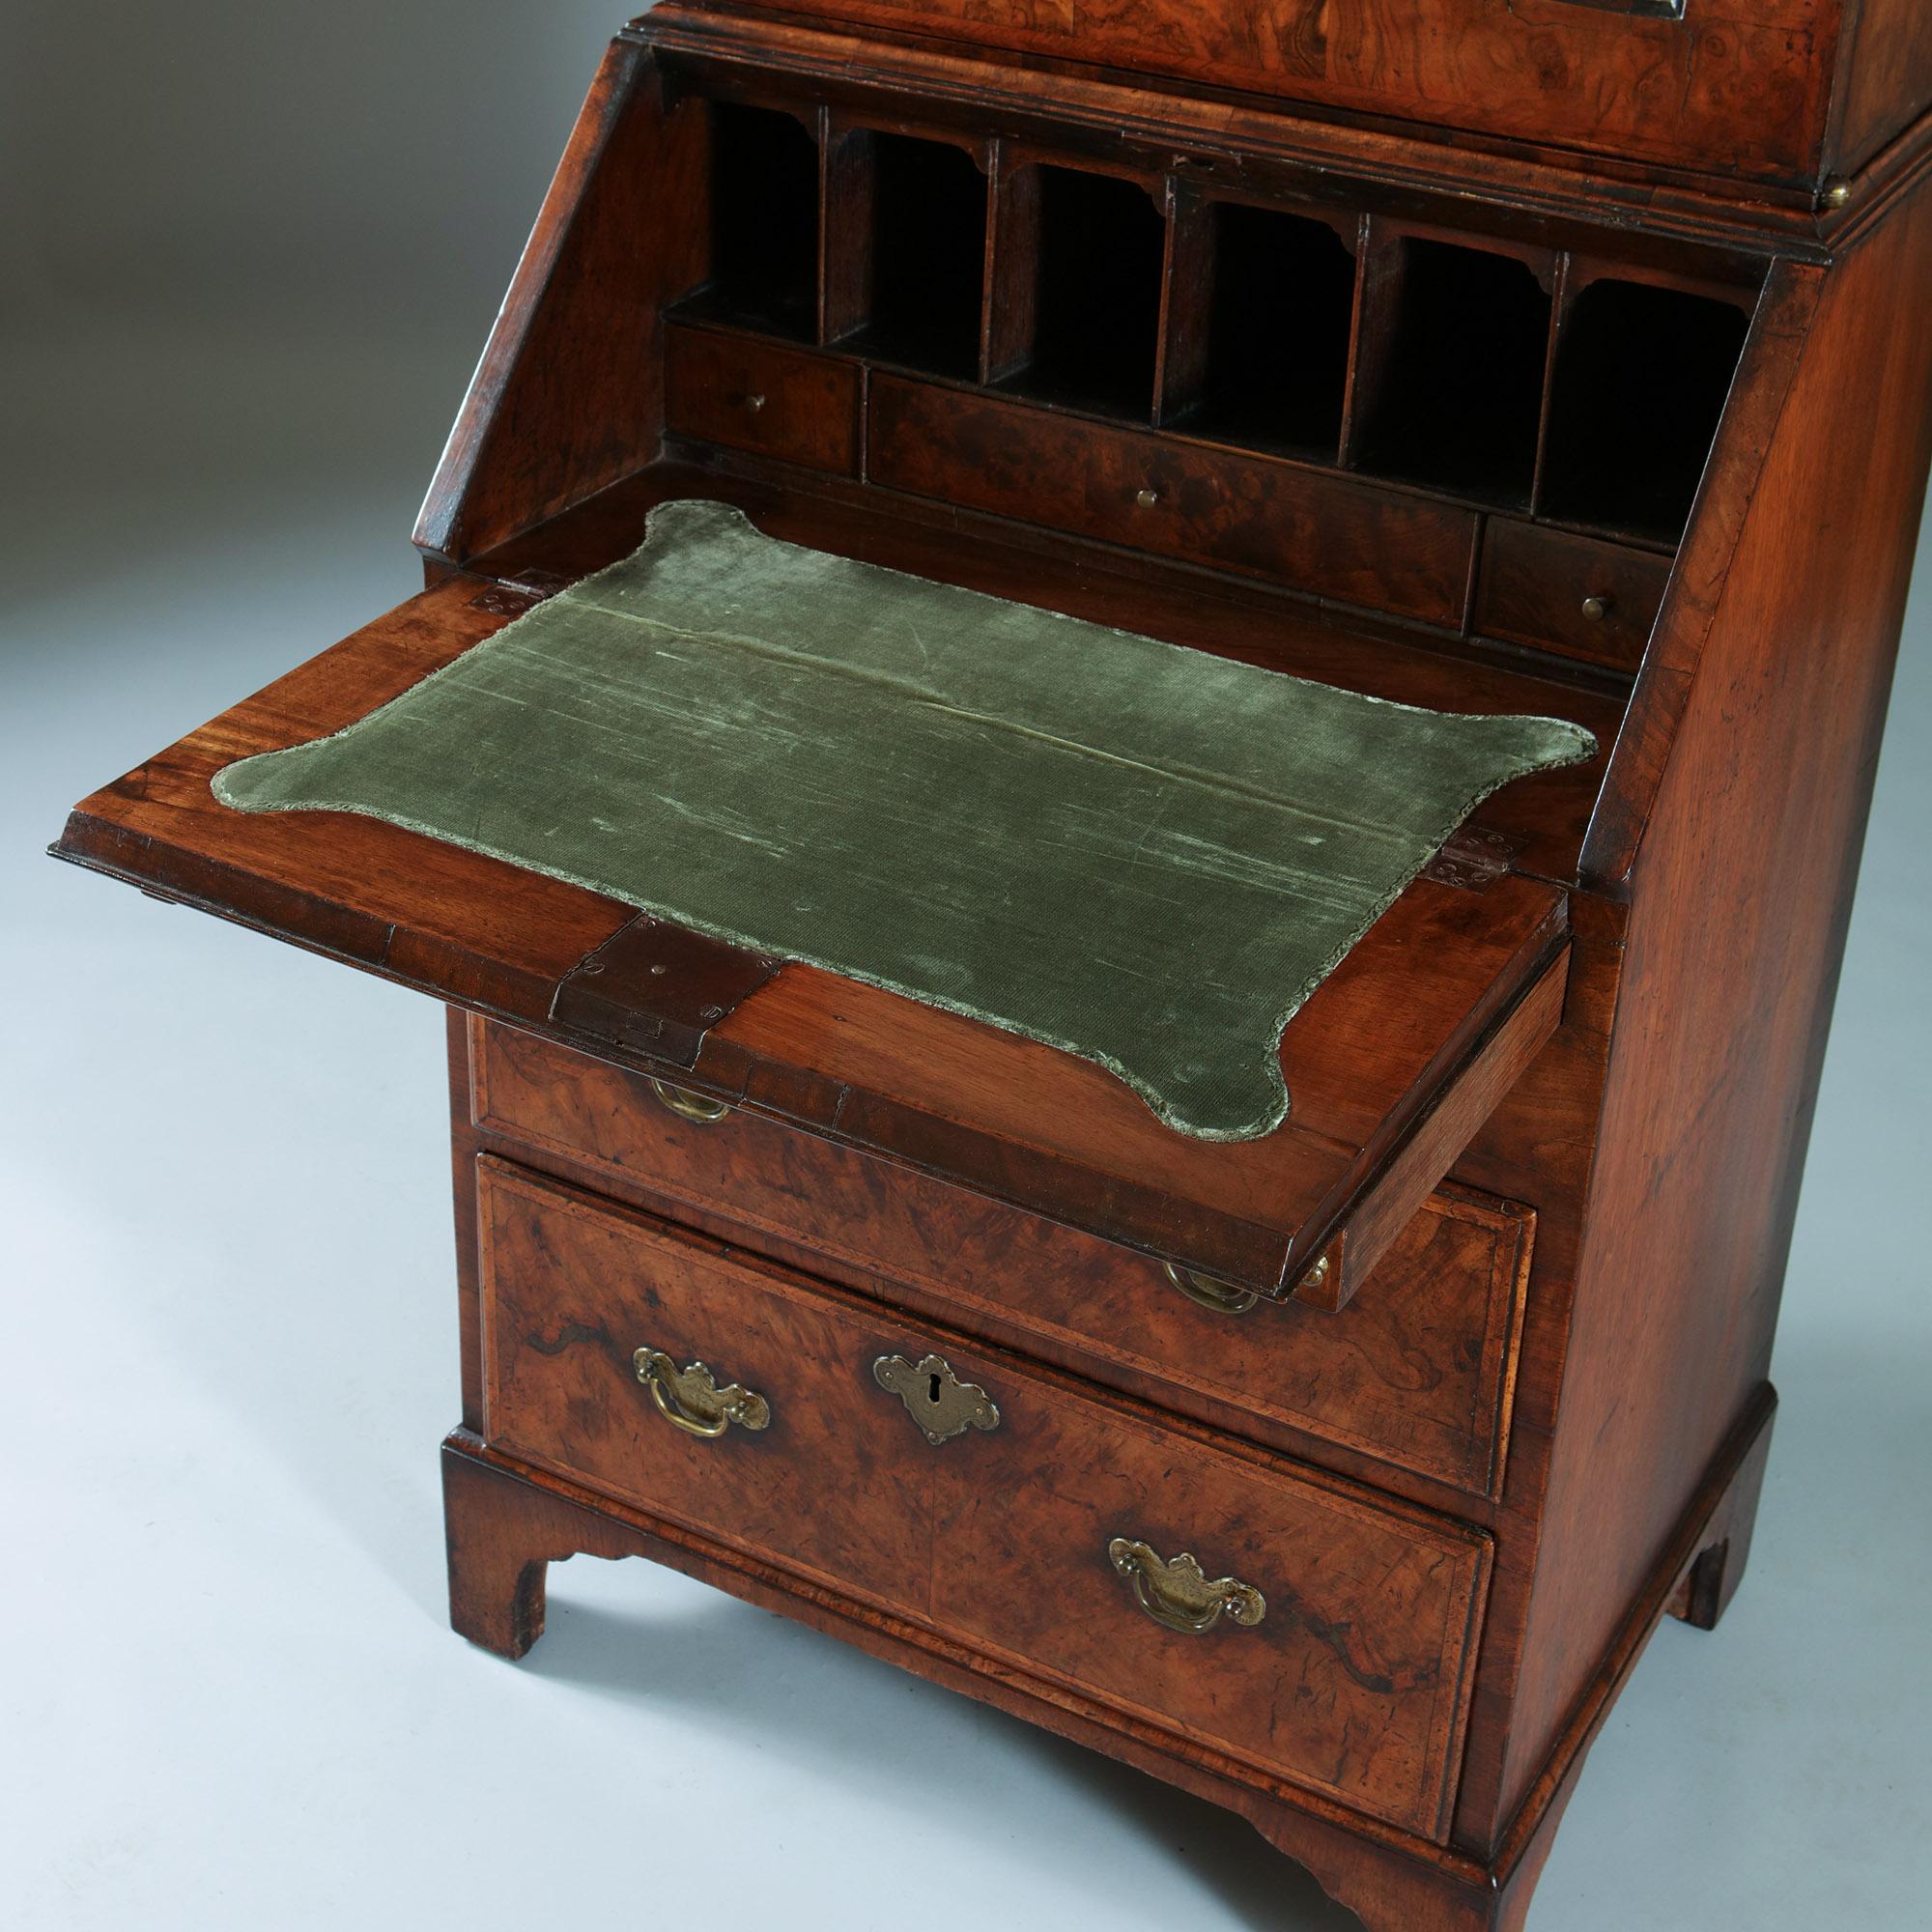 A Fine Early 18th Century George I Burr Walnut Bureau Bookcase, Circa 1715 In Good Condition For Sale In Oxfordshire, United Kingdom